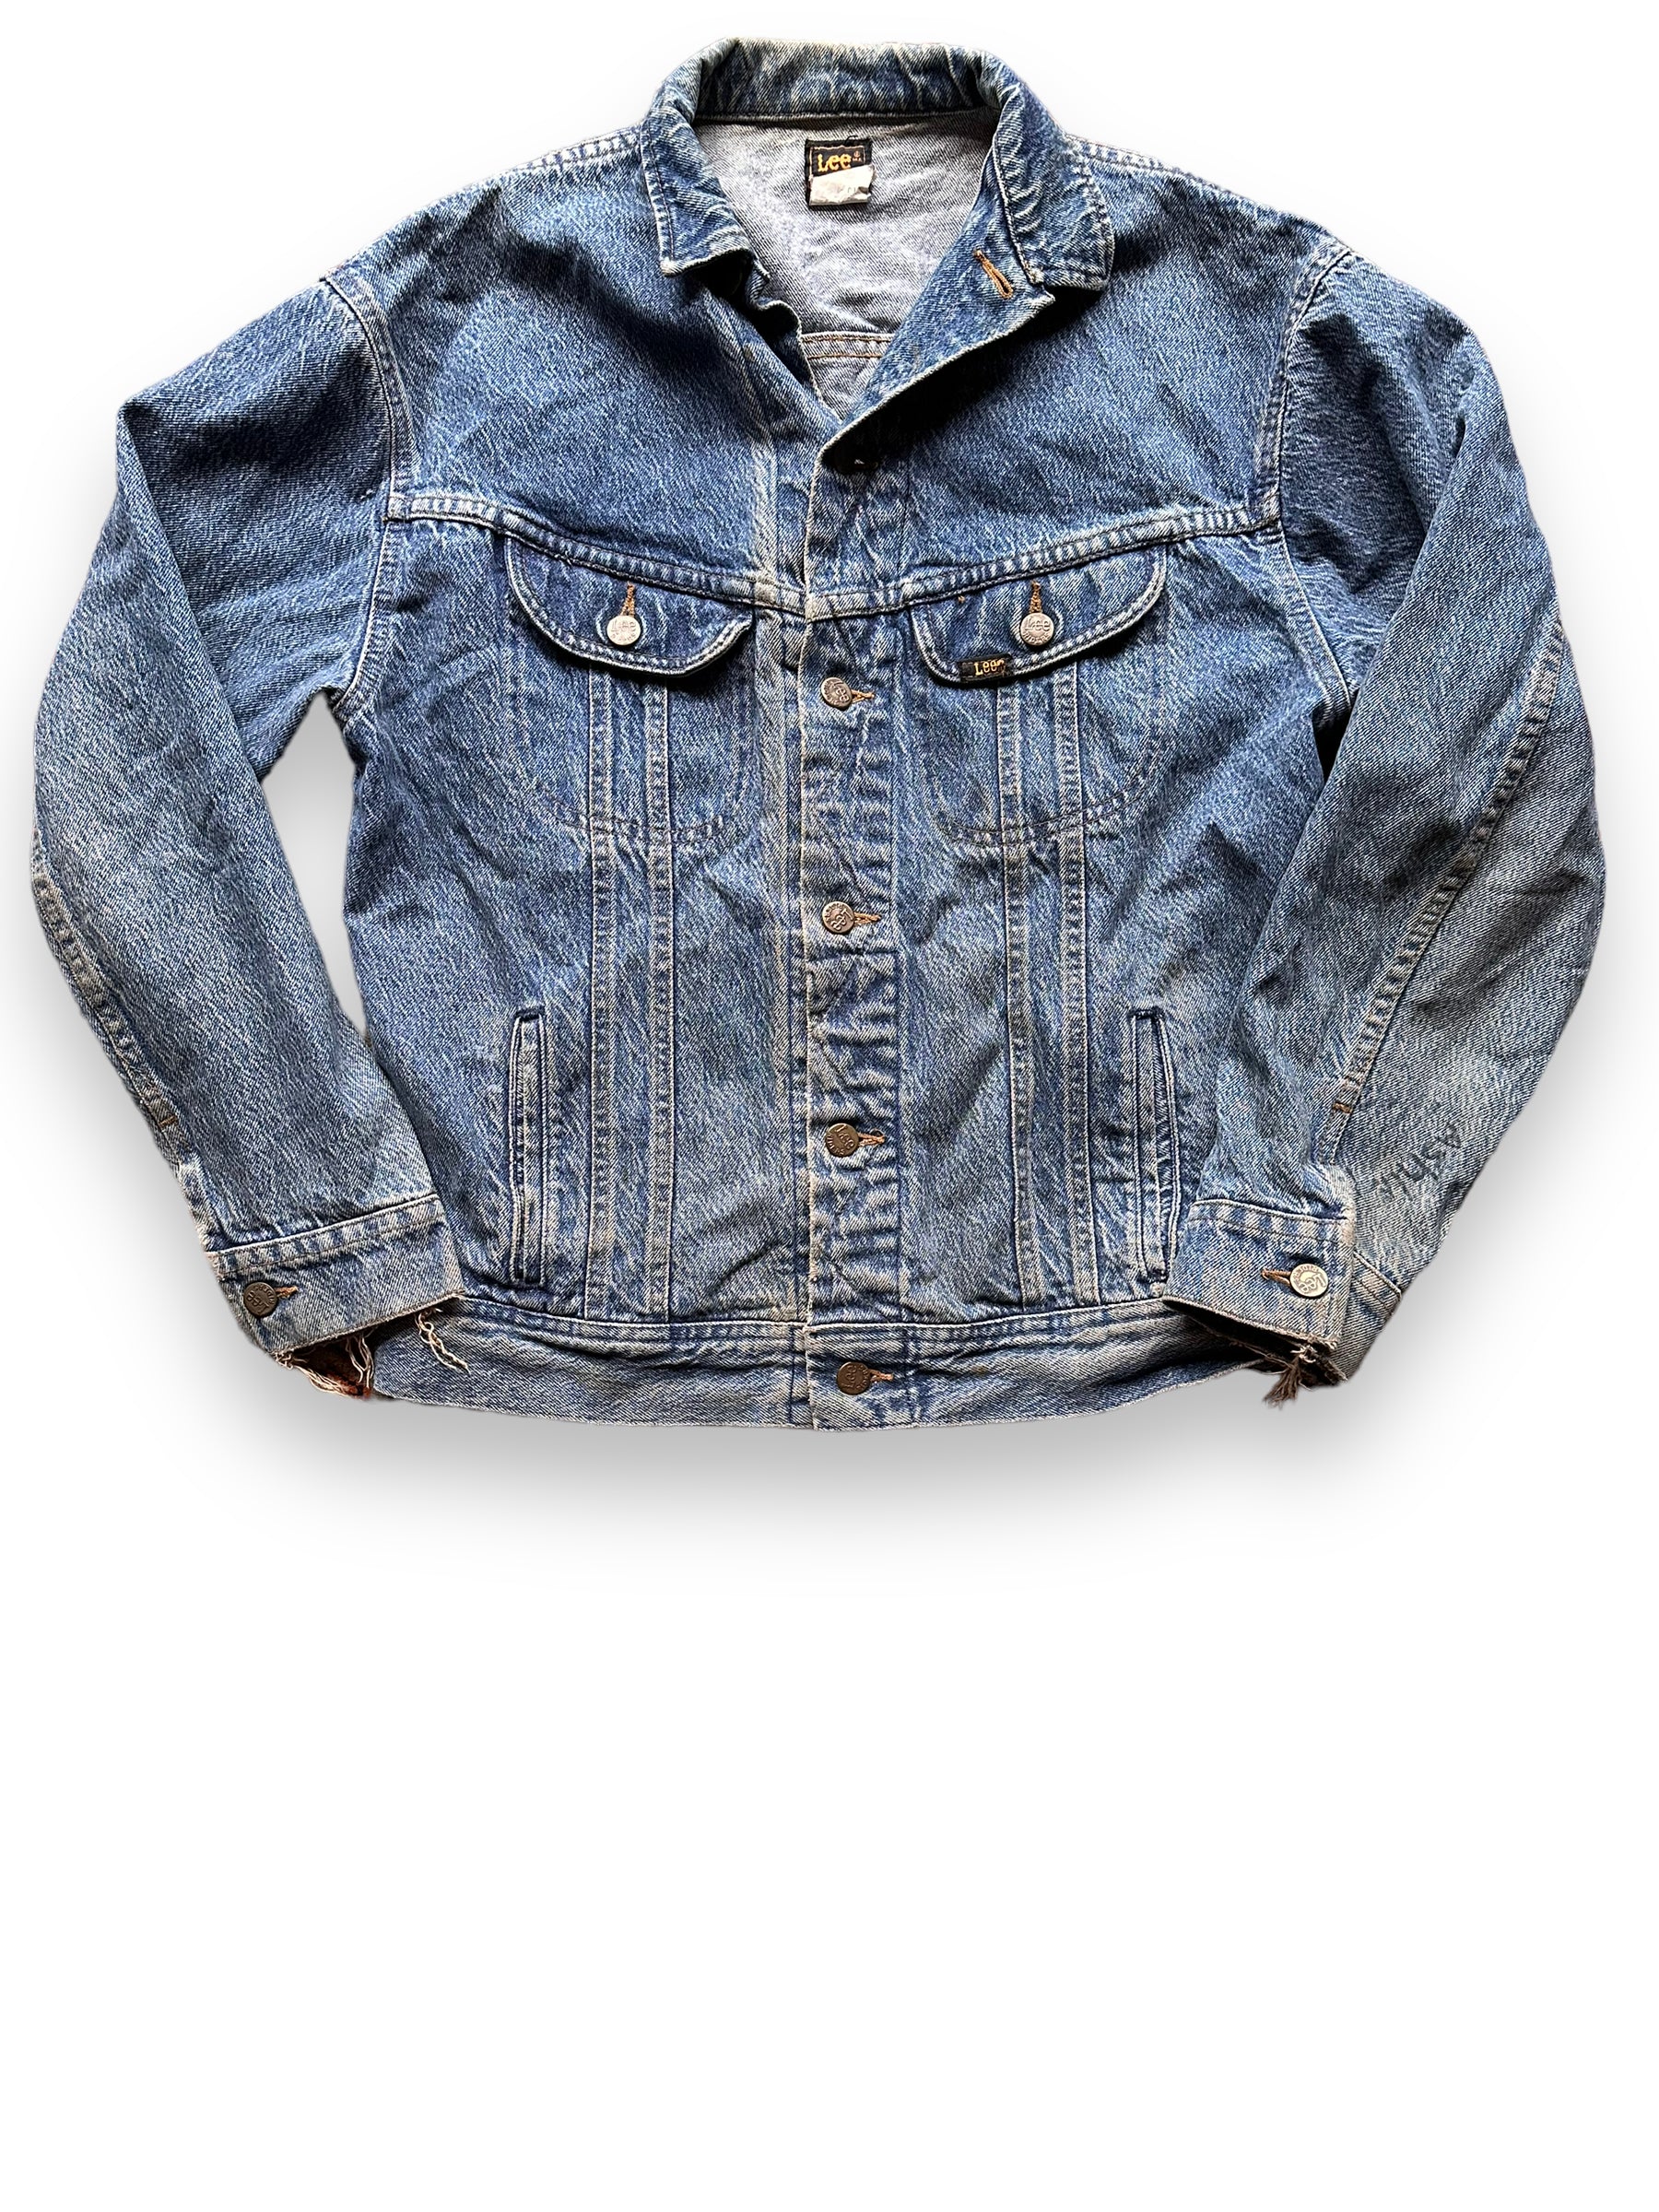 Front View of Vintage Lee 101-J Denim Jacket SZ XL | Vintage Denim Workwear Seattle | Seattle Vintage Denim